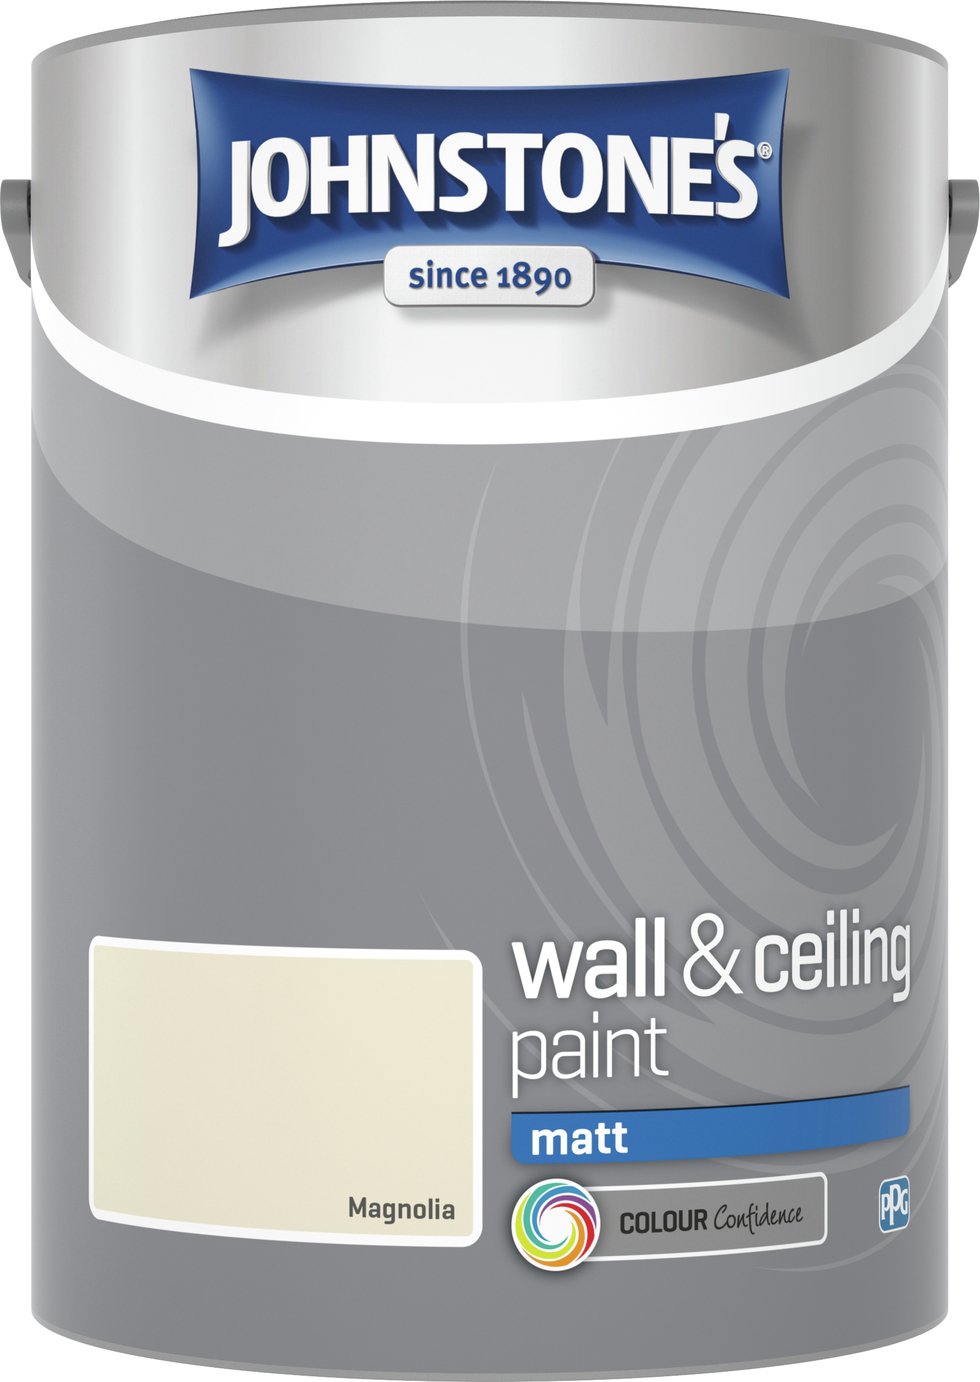 Johnstone's Wall & Ceiling Paint Matt 5L Review